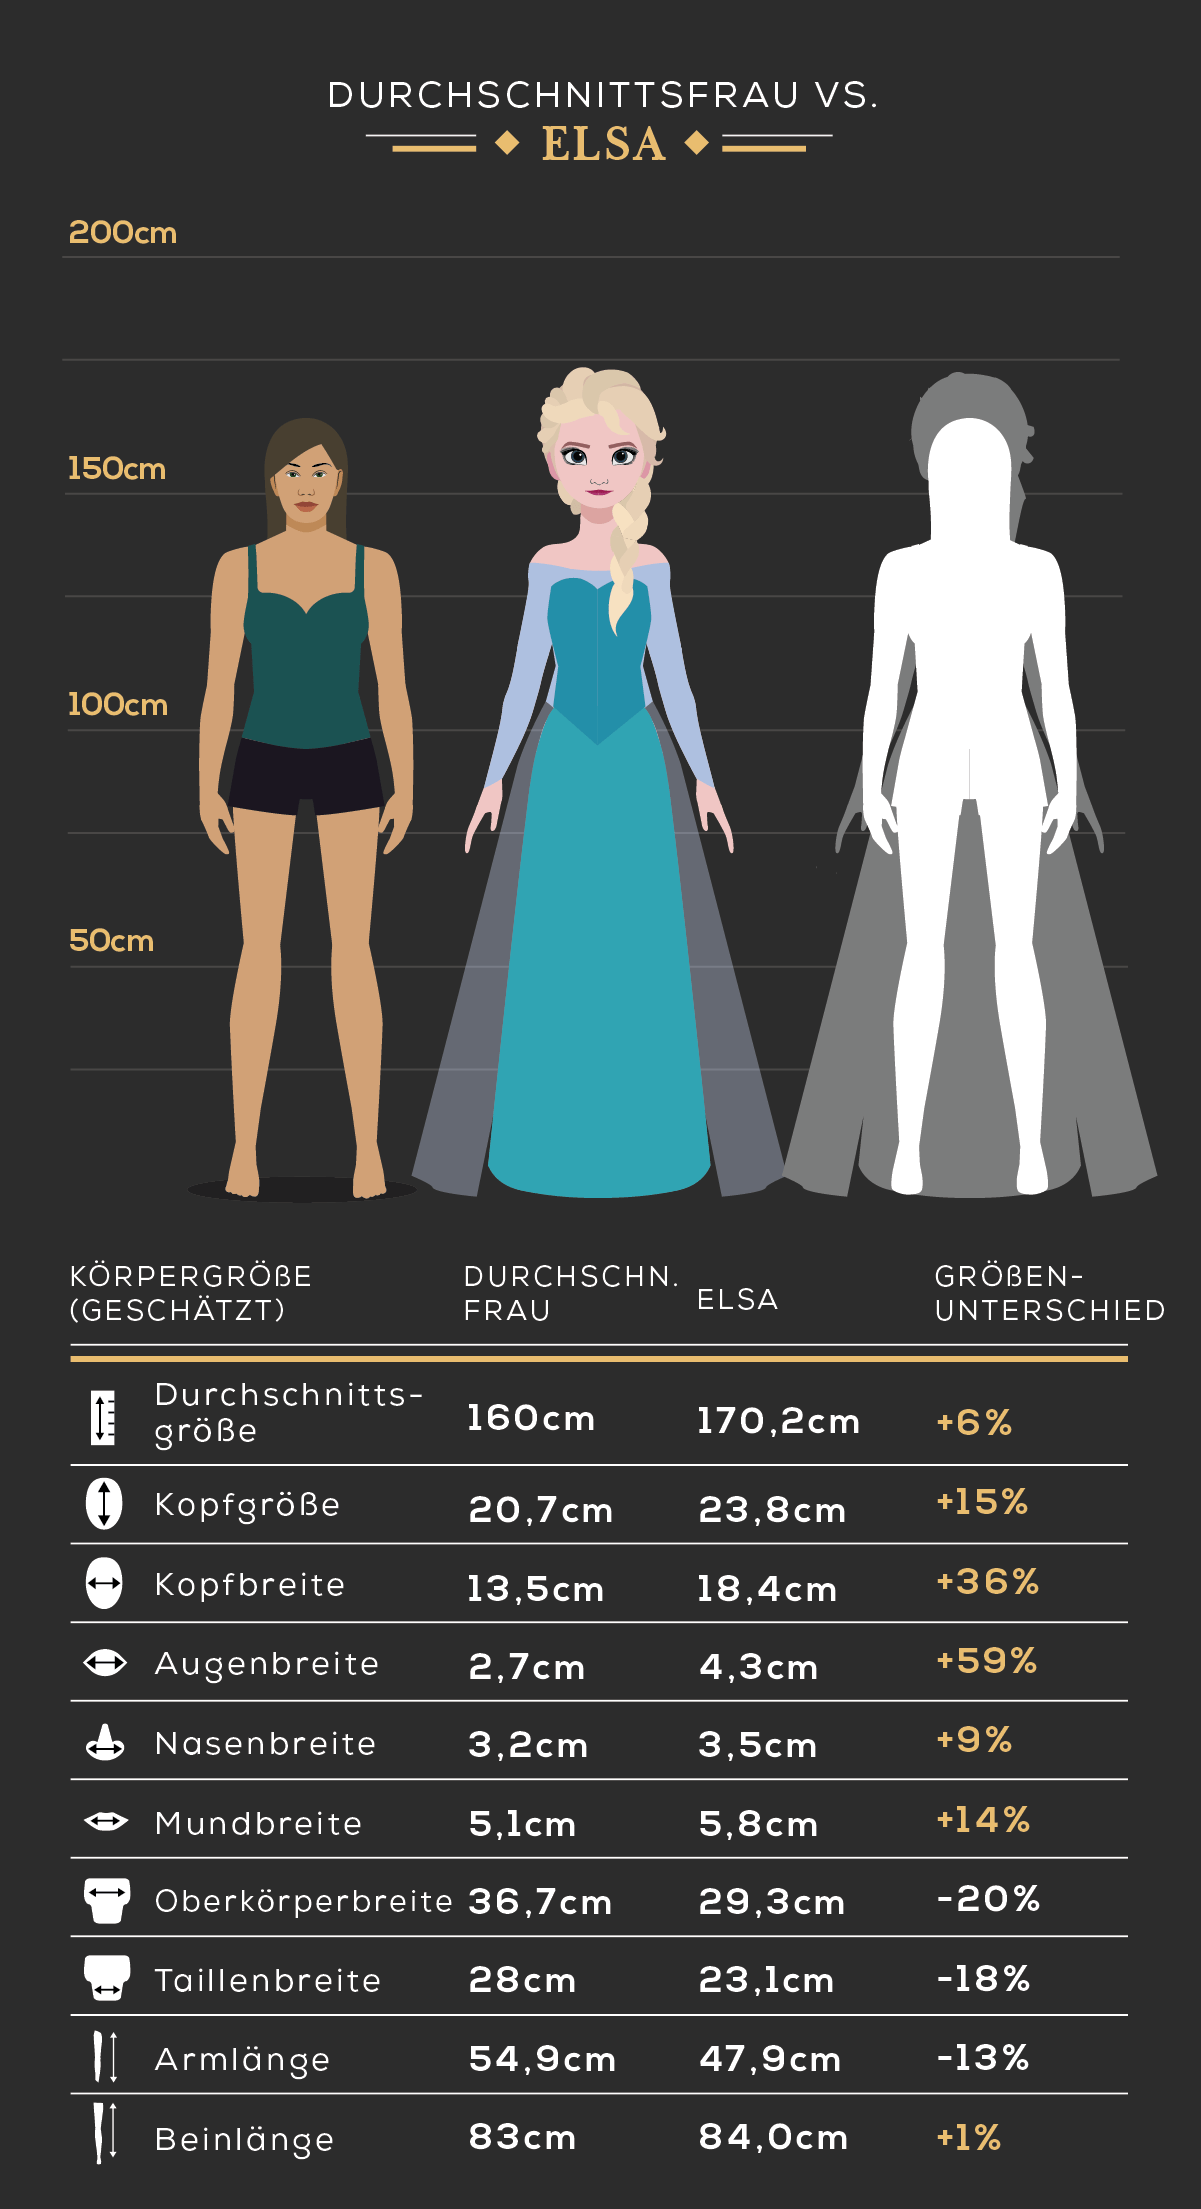 Körpergröße der Durchschnittsfrau vs. Elsa